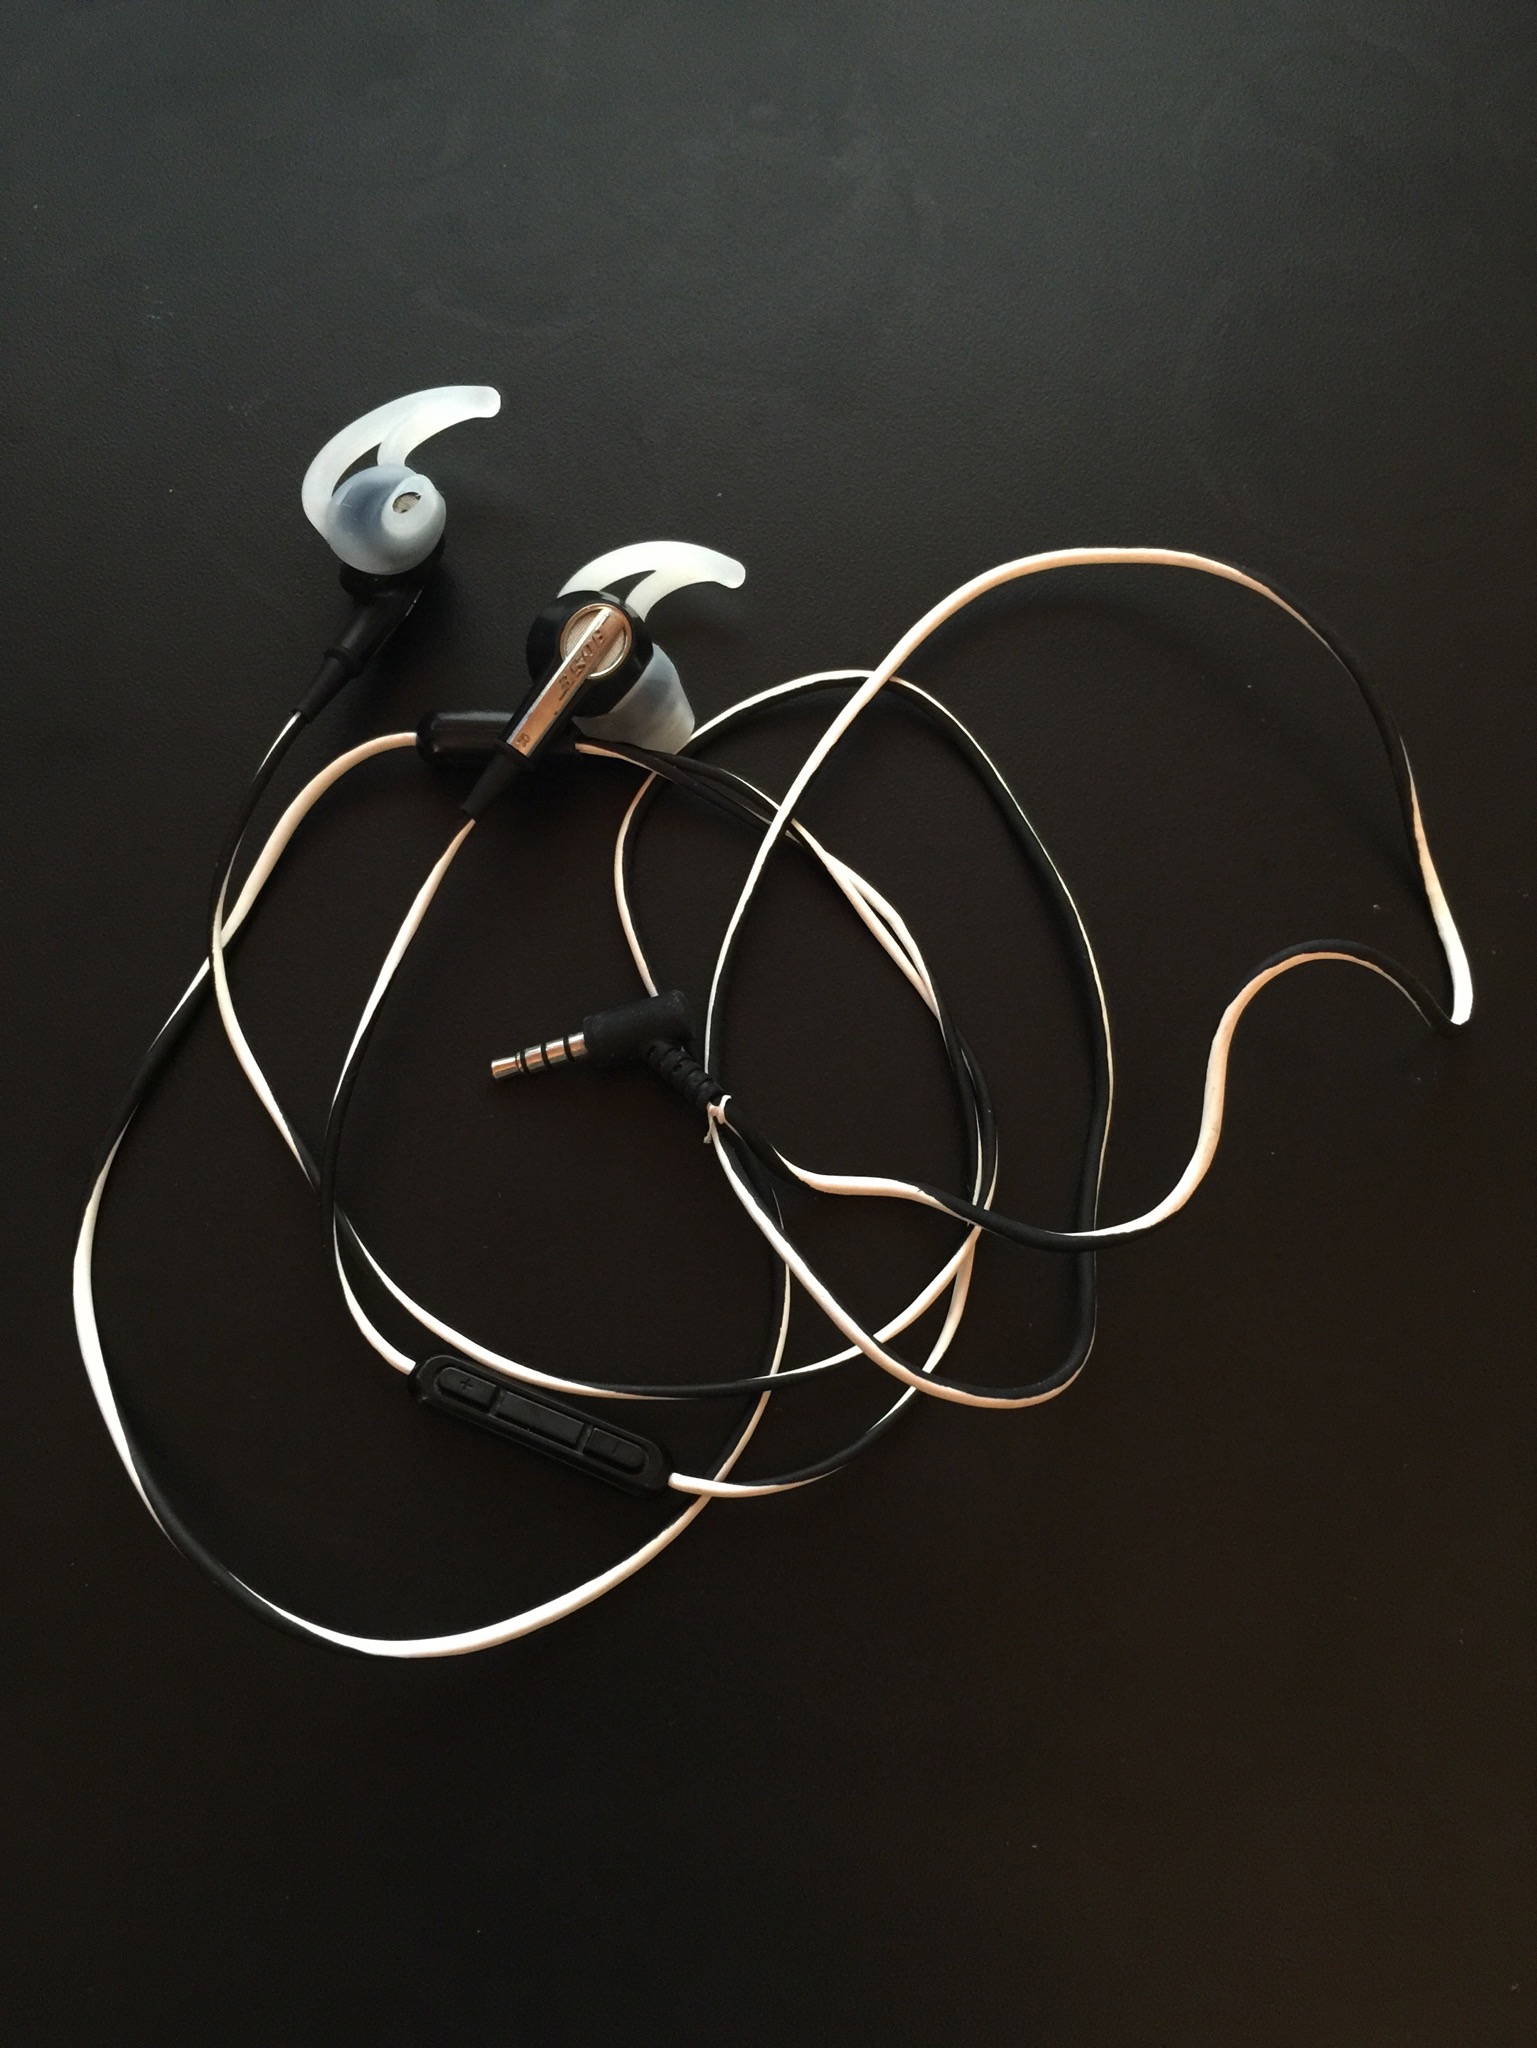 Bose MIE2i headphones